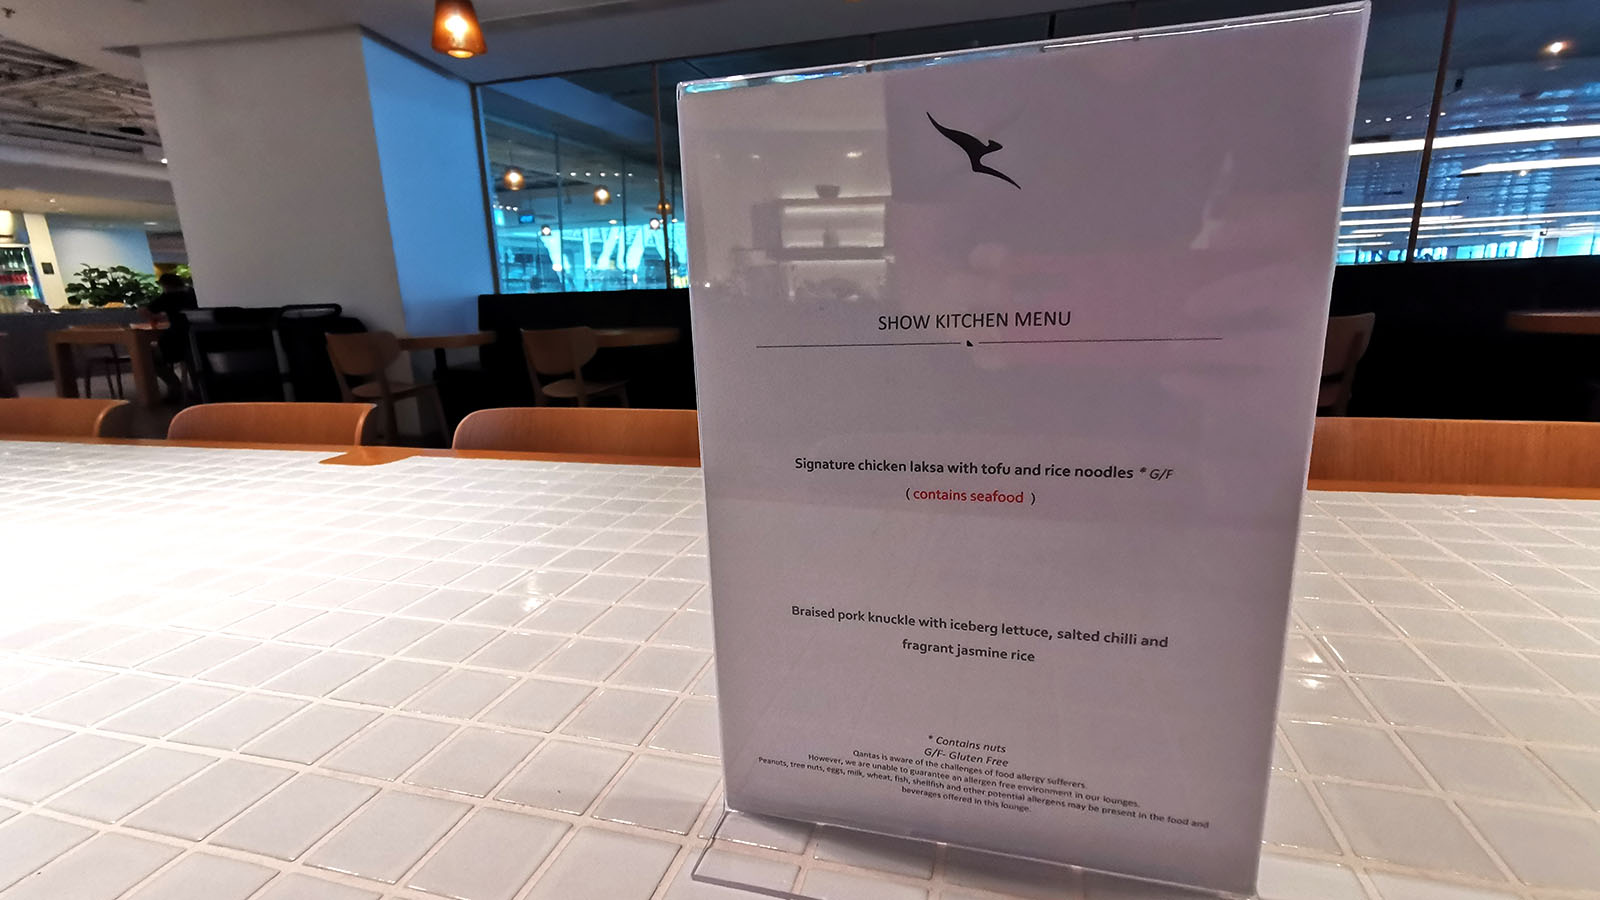 Show kitchen dining menu at the Qantas International Business Lounge in Singapore